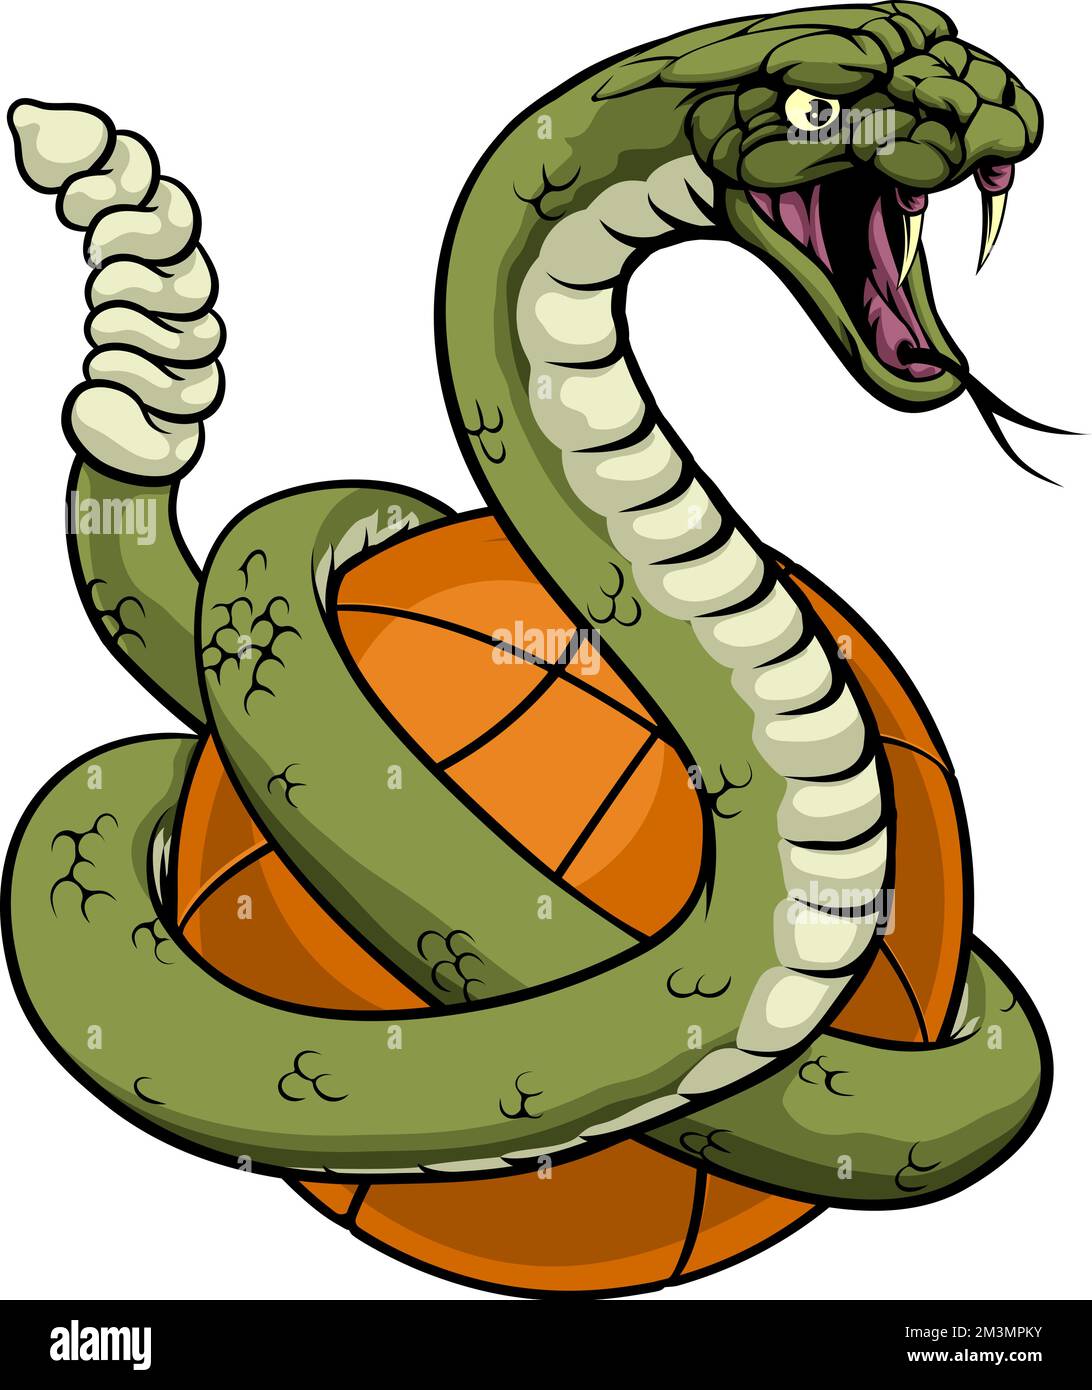 Rattlesnake Basketball Animal Sports Team Mascot Illustrazione Vettoriale